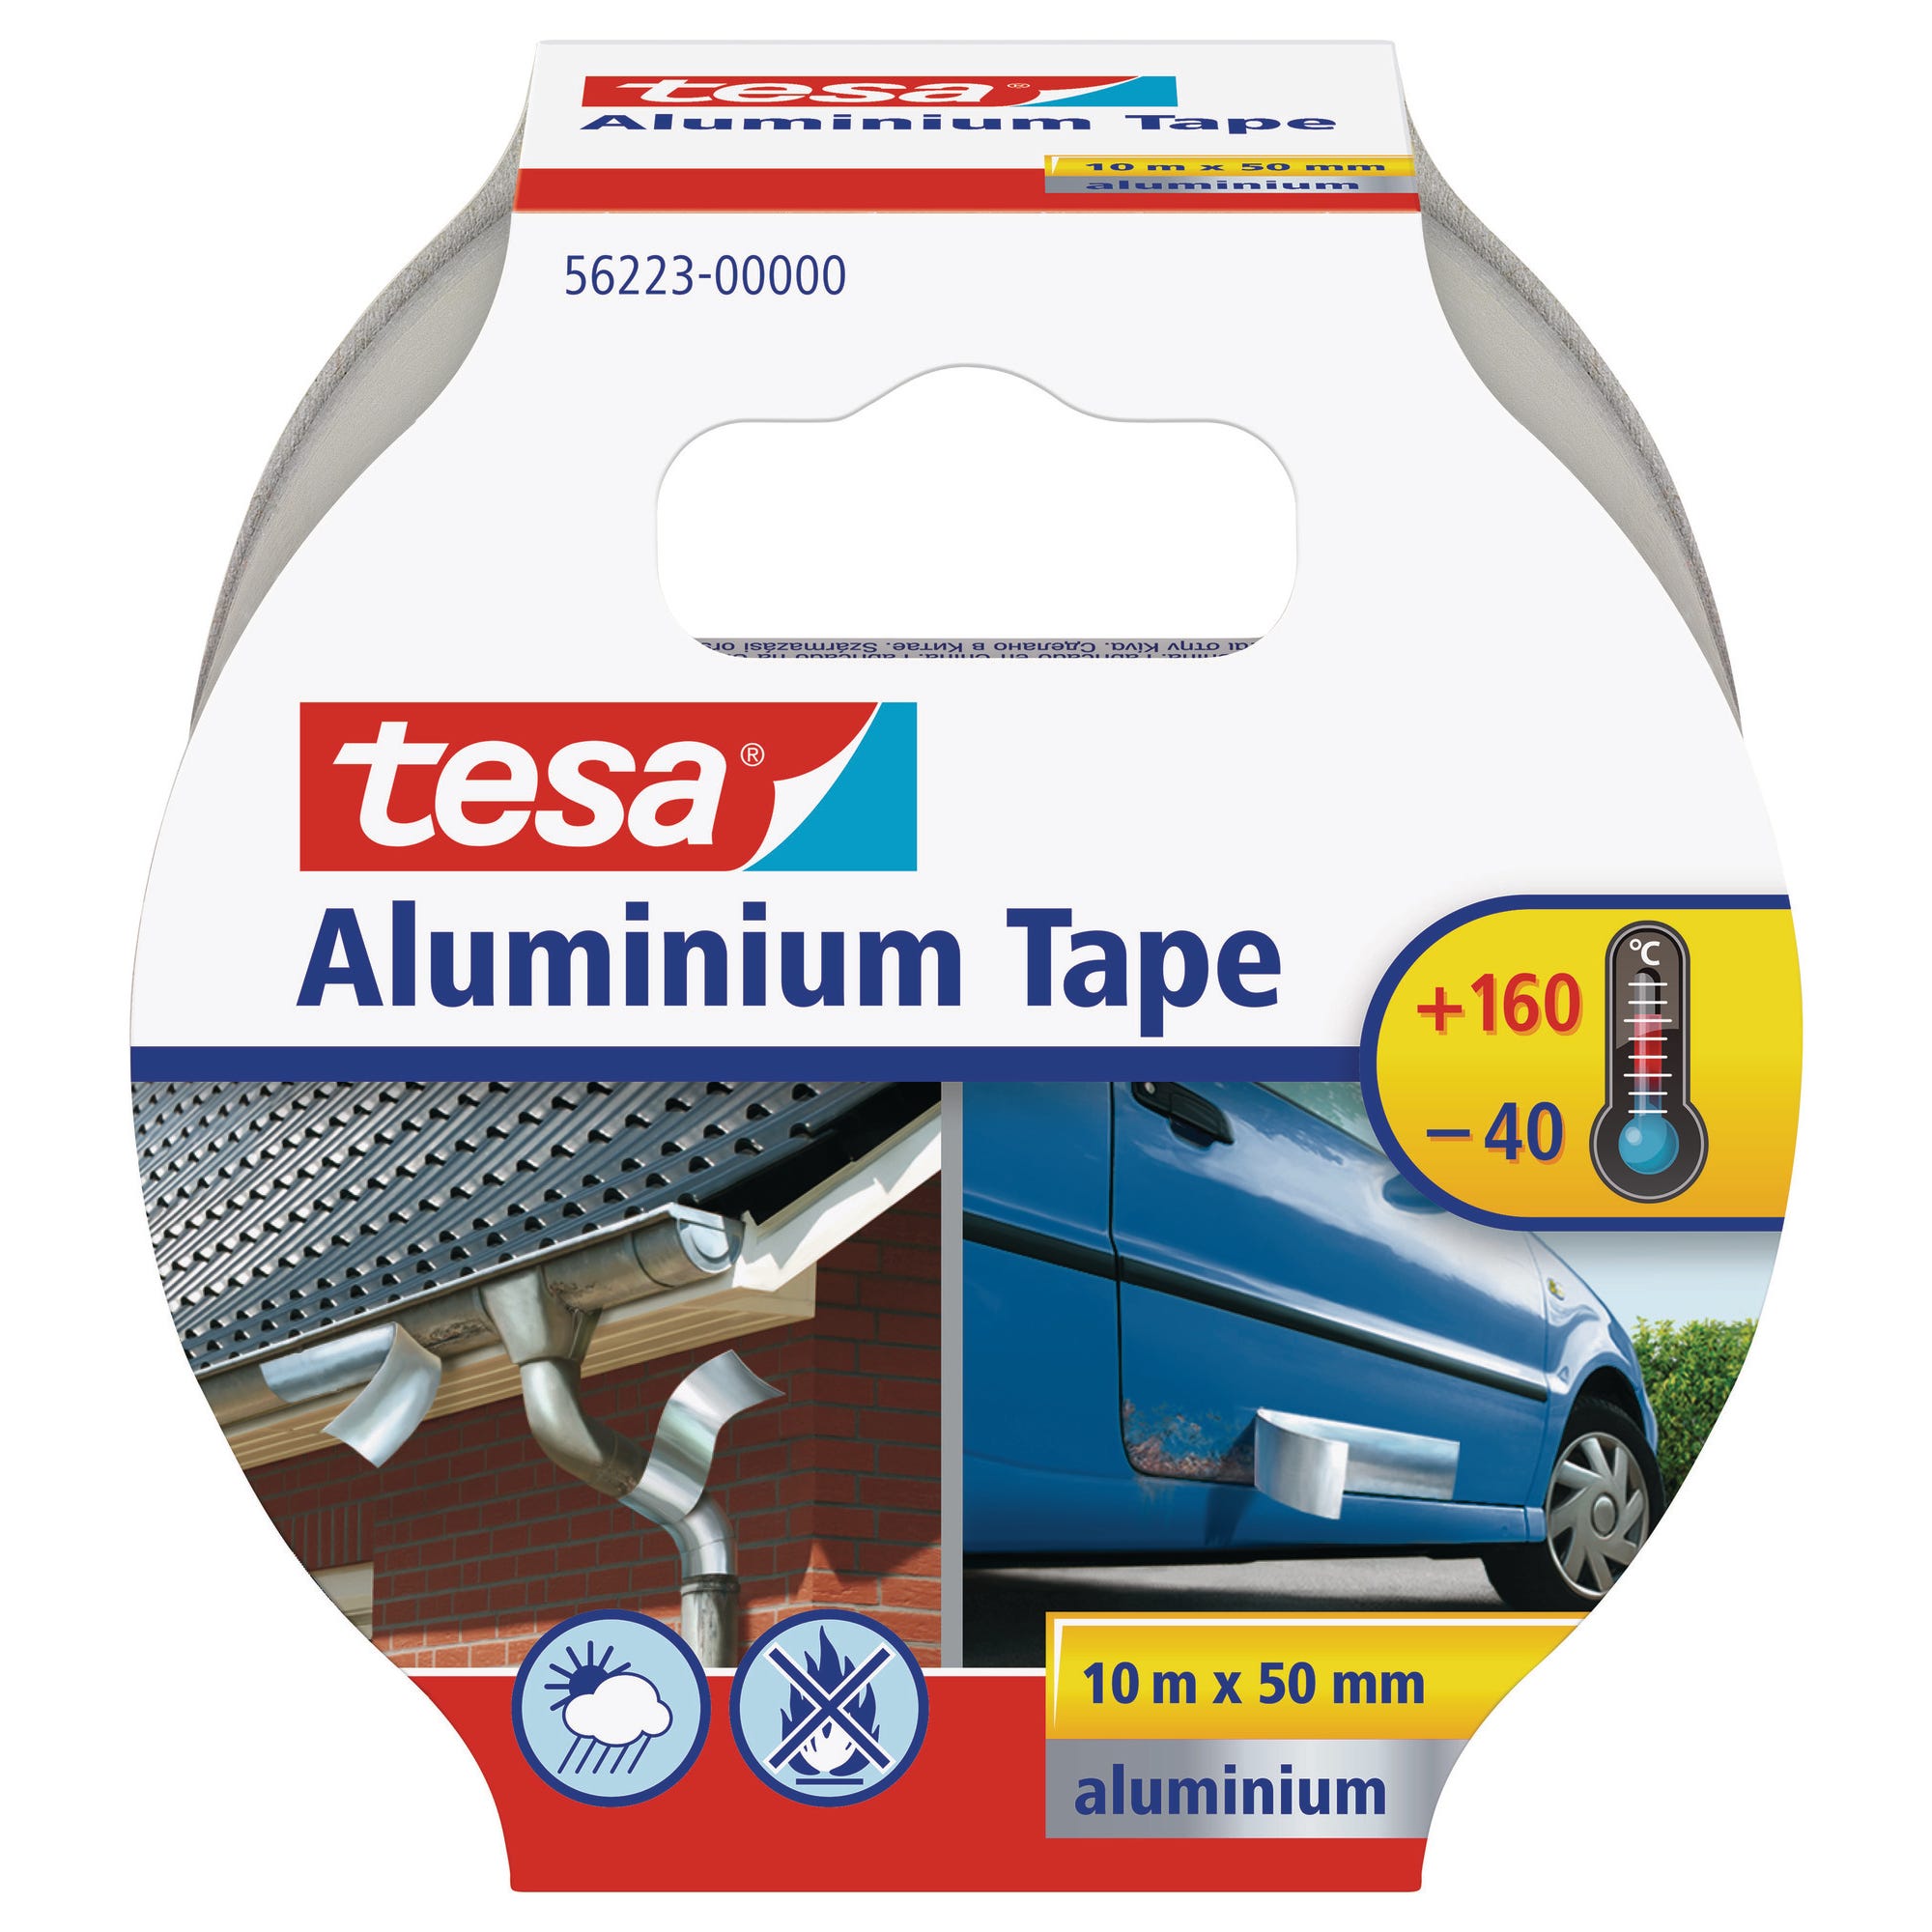 Adhésif de réparation en aluminium 10 m x 50 mm - TESA 0